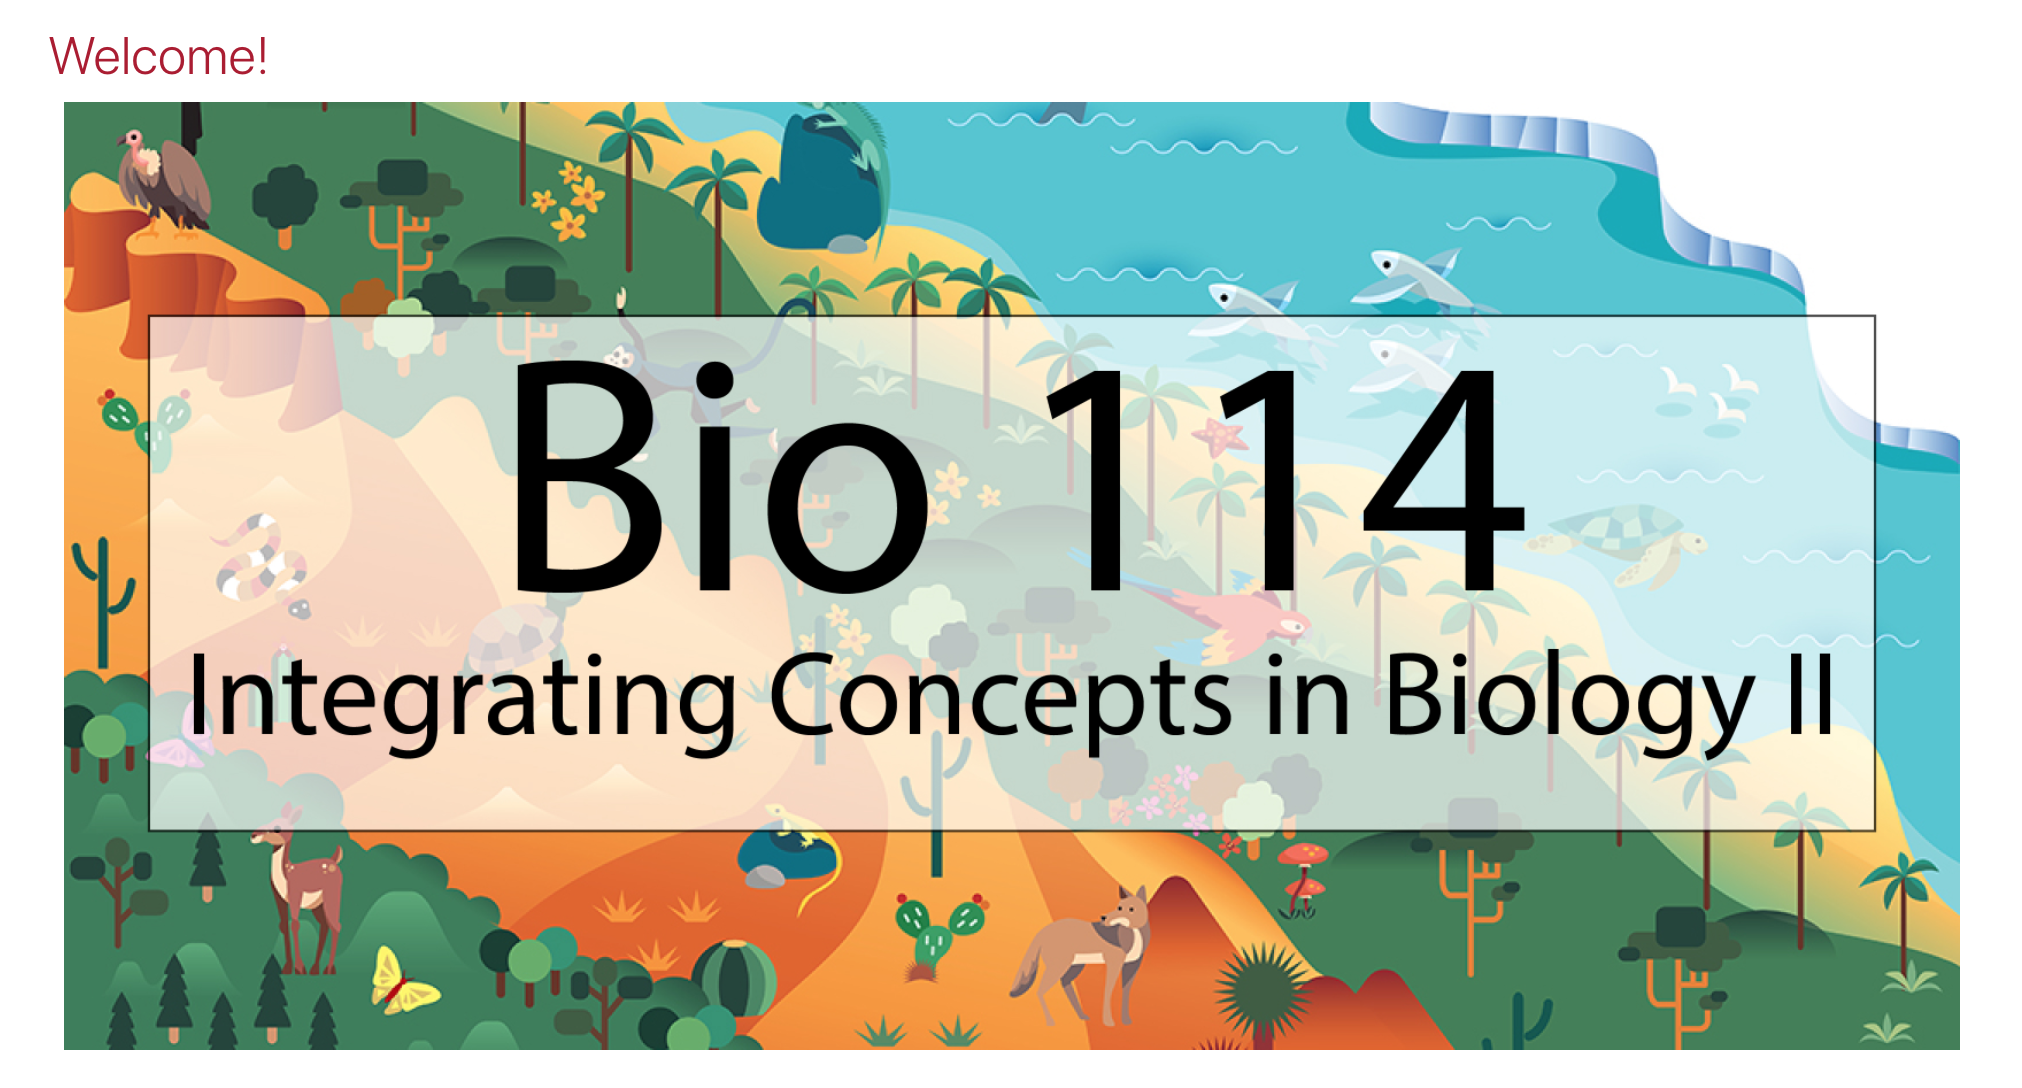 Bio 114 course image